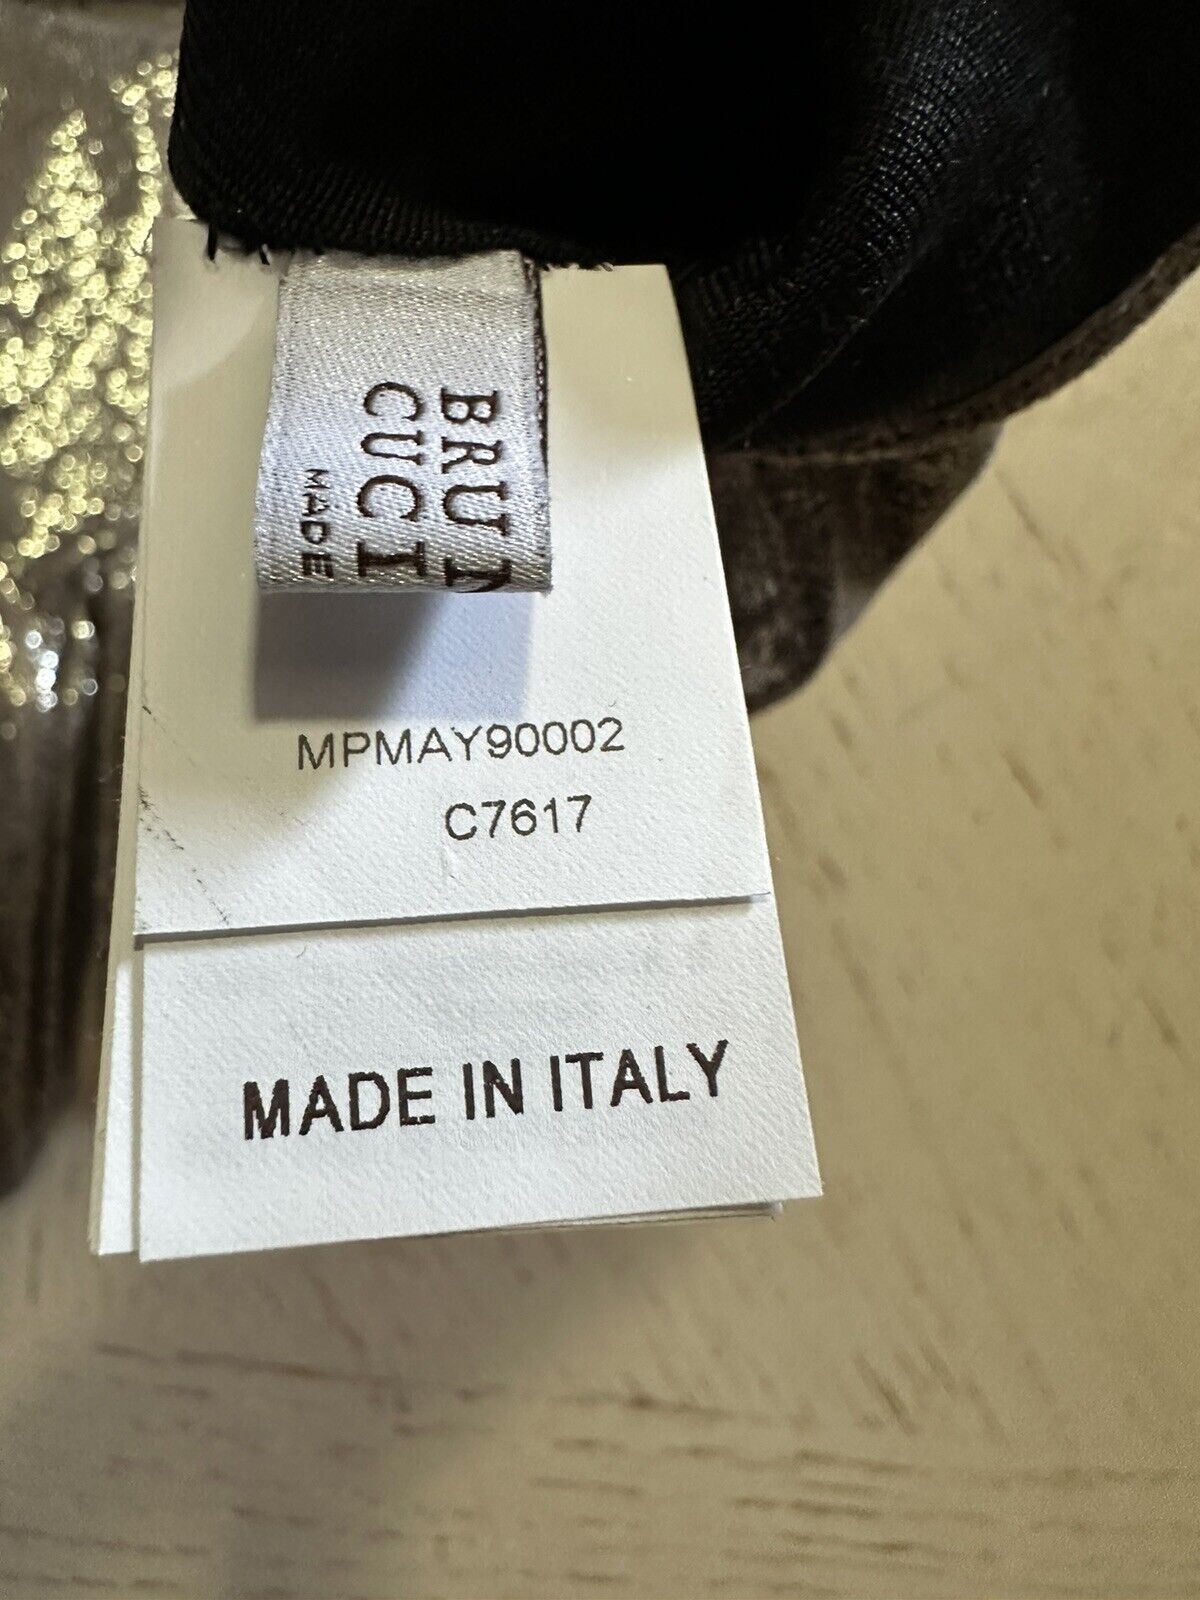 NWT $650 Brunello Cucinelli Women Metallic Leather Gloves Color Silver Size M